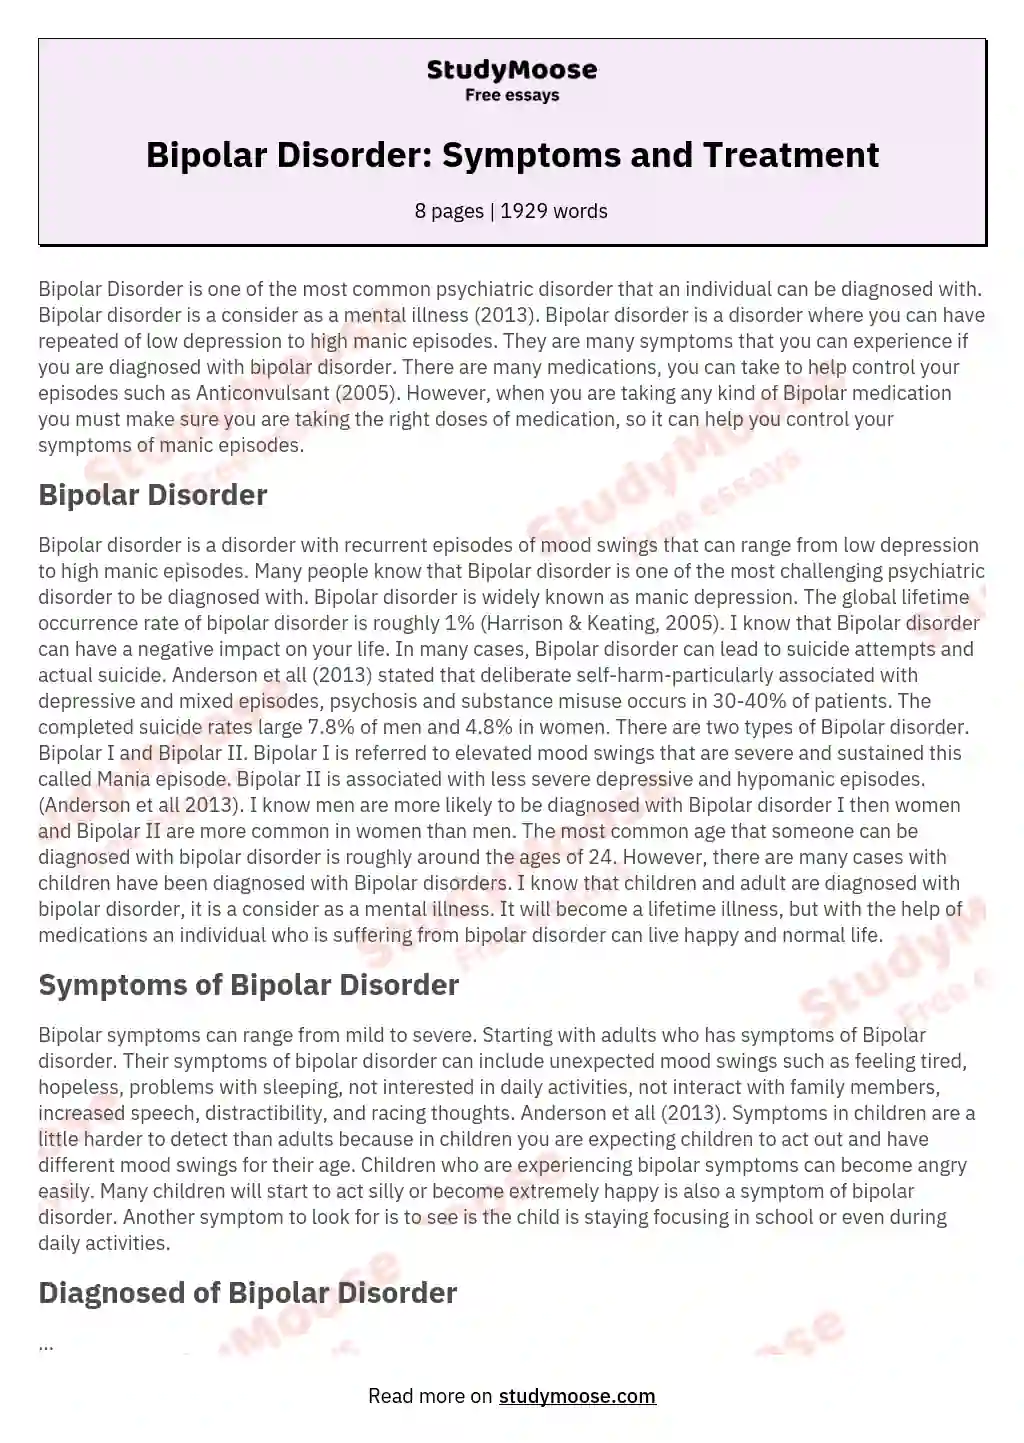 Bipolar Disorder: Symptoms and Treatment essay